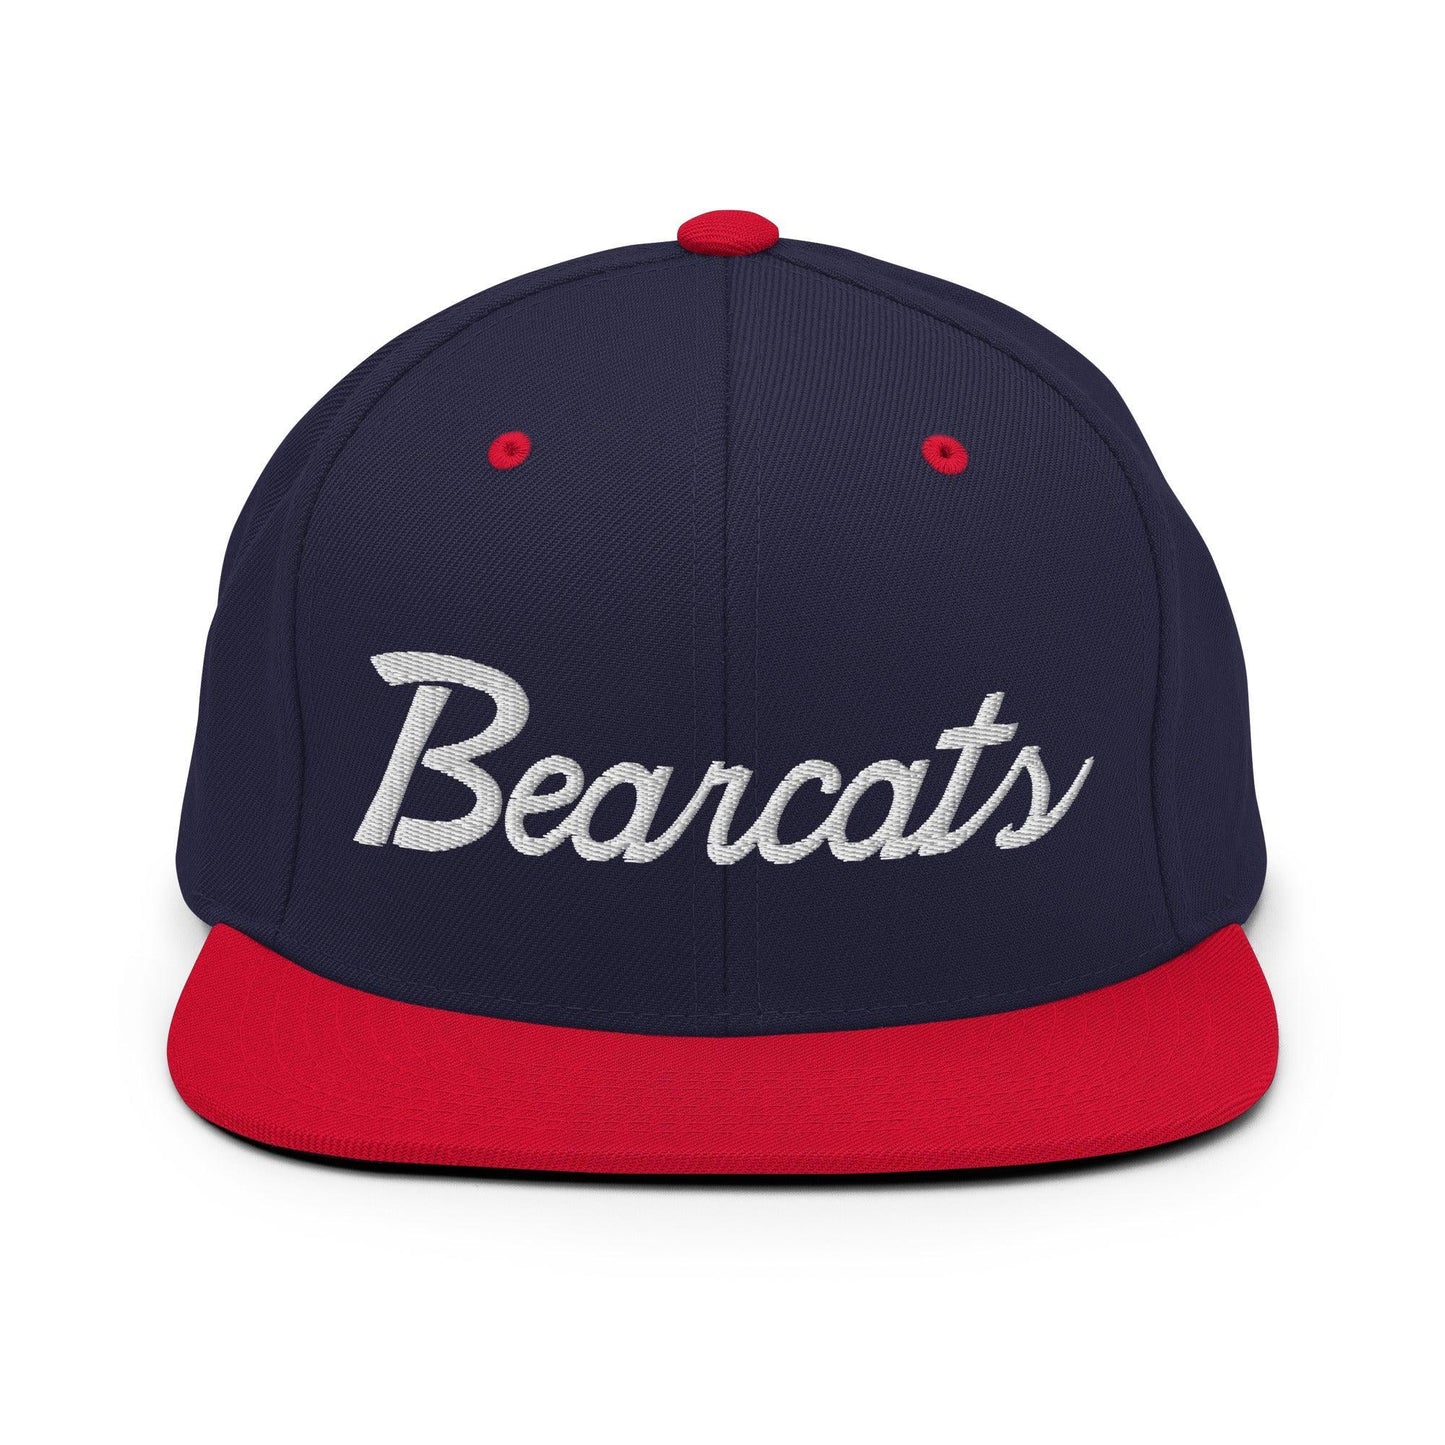 Bearcats School Mascot Script Snapback Hat Navy/ Red